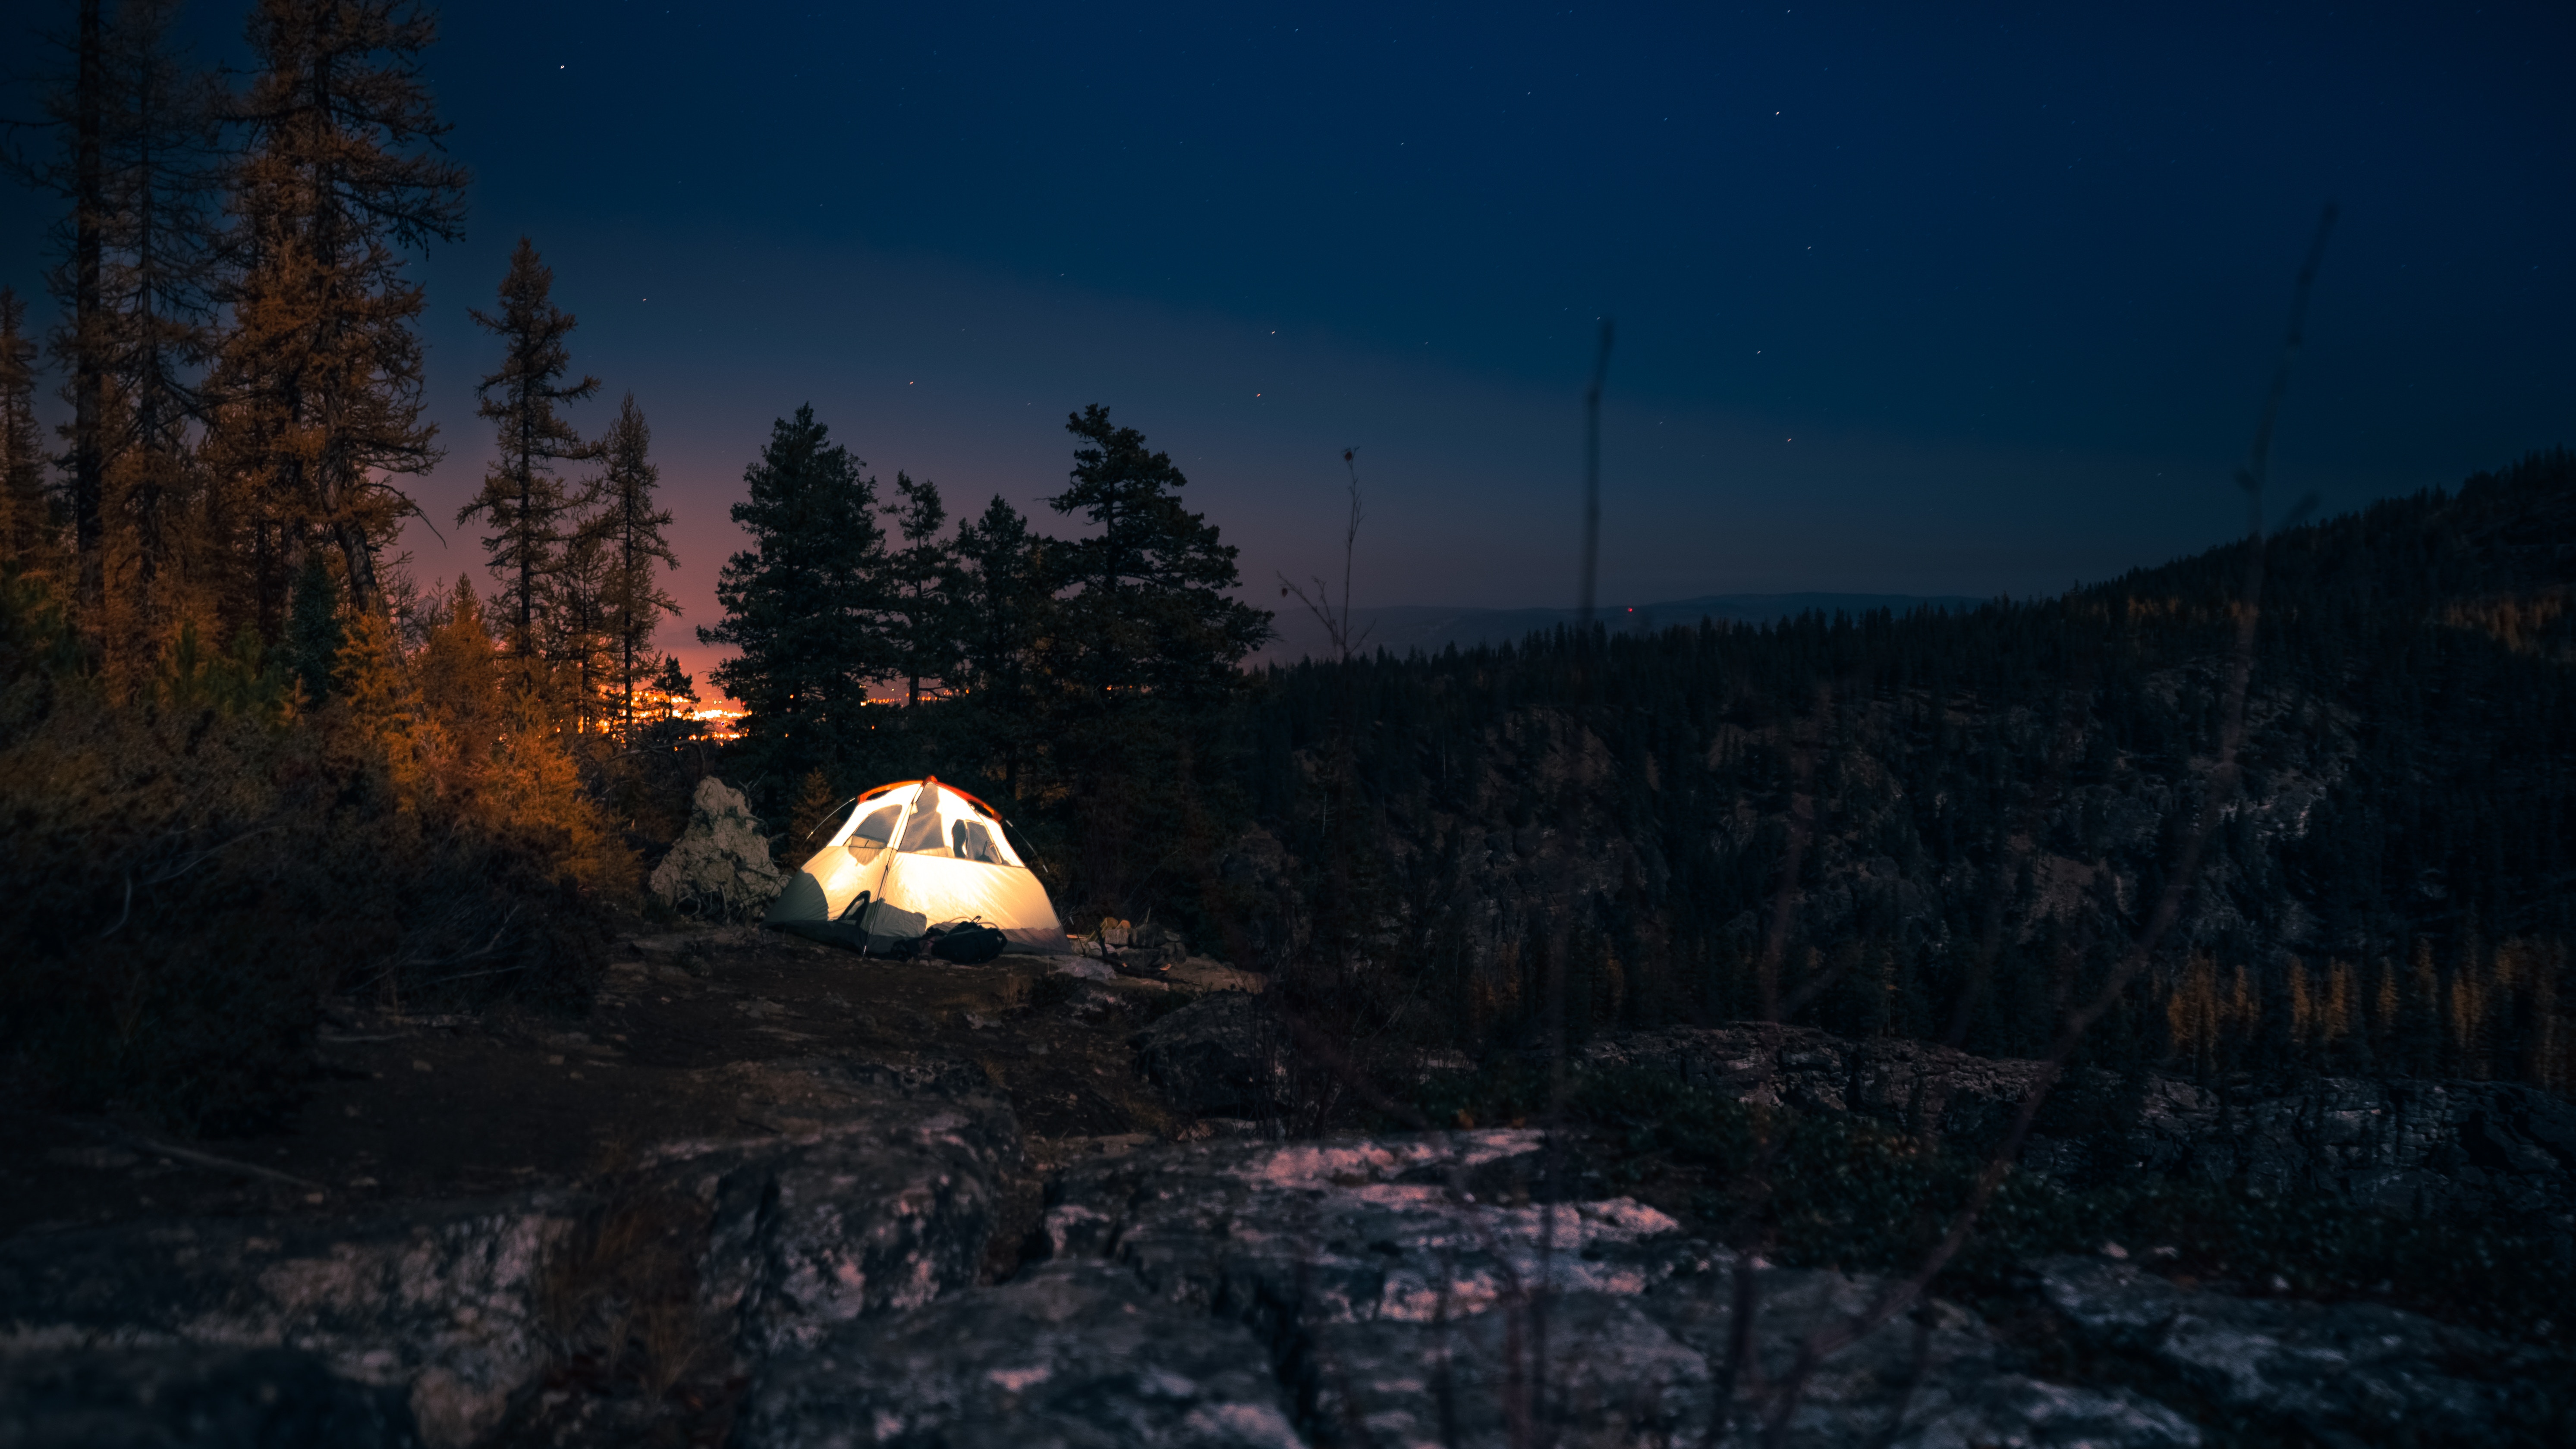 dark, night, trees, starry sky, tent, camping, campsite